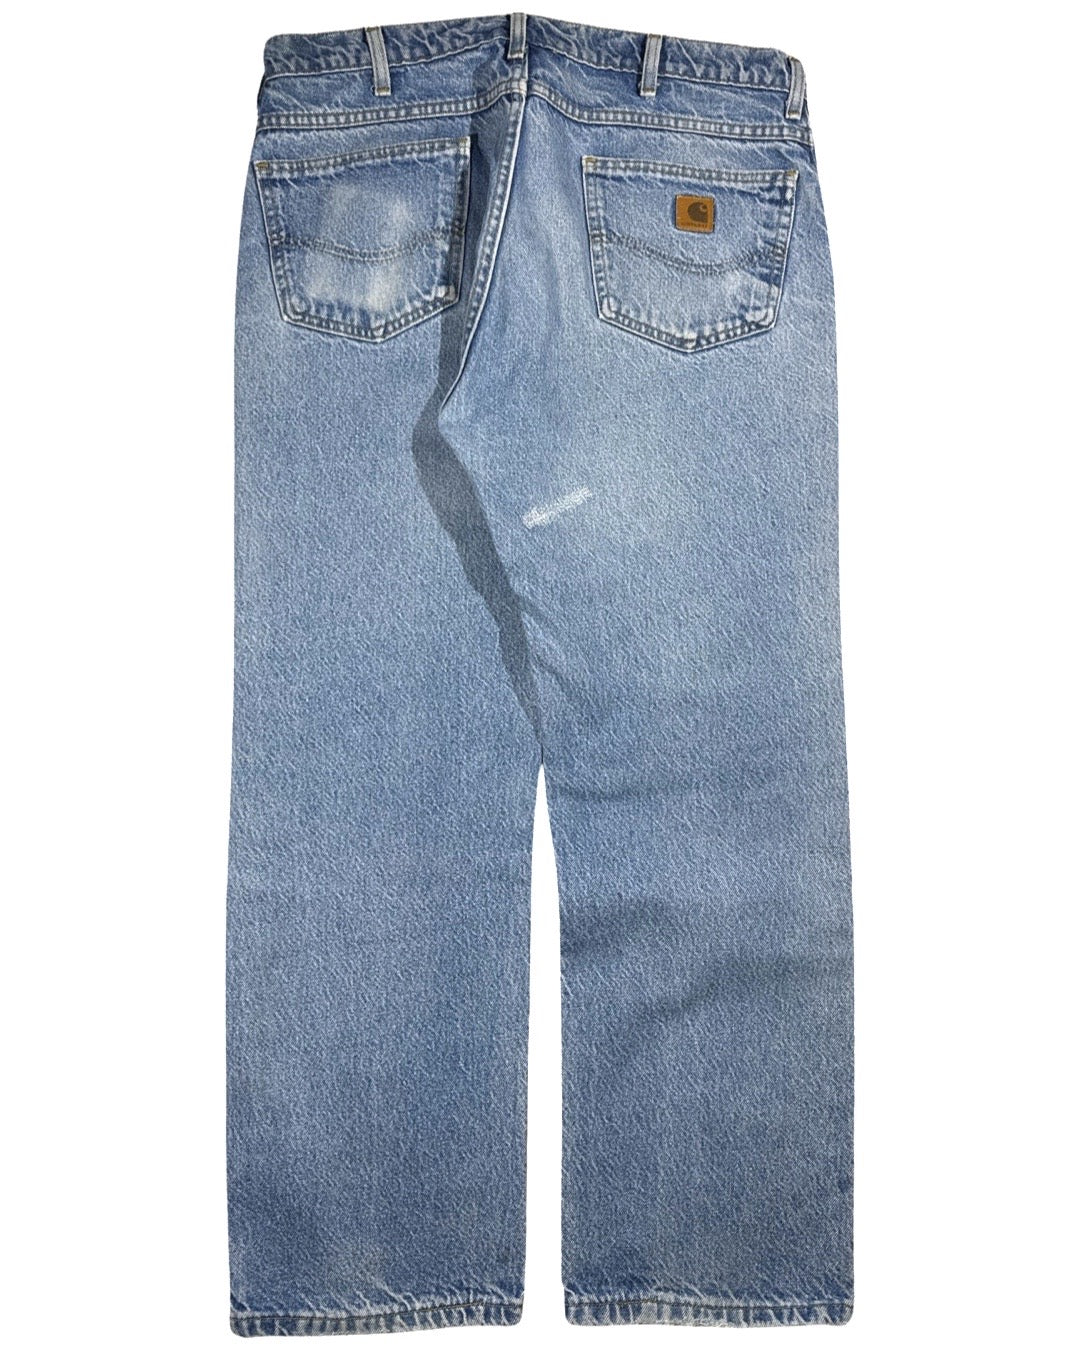 Vintage Carhartt Jeans - W 36"